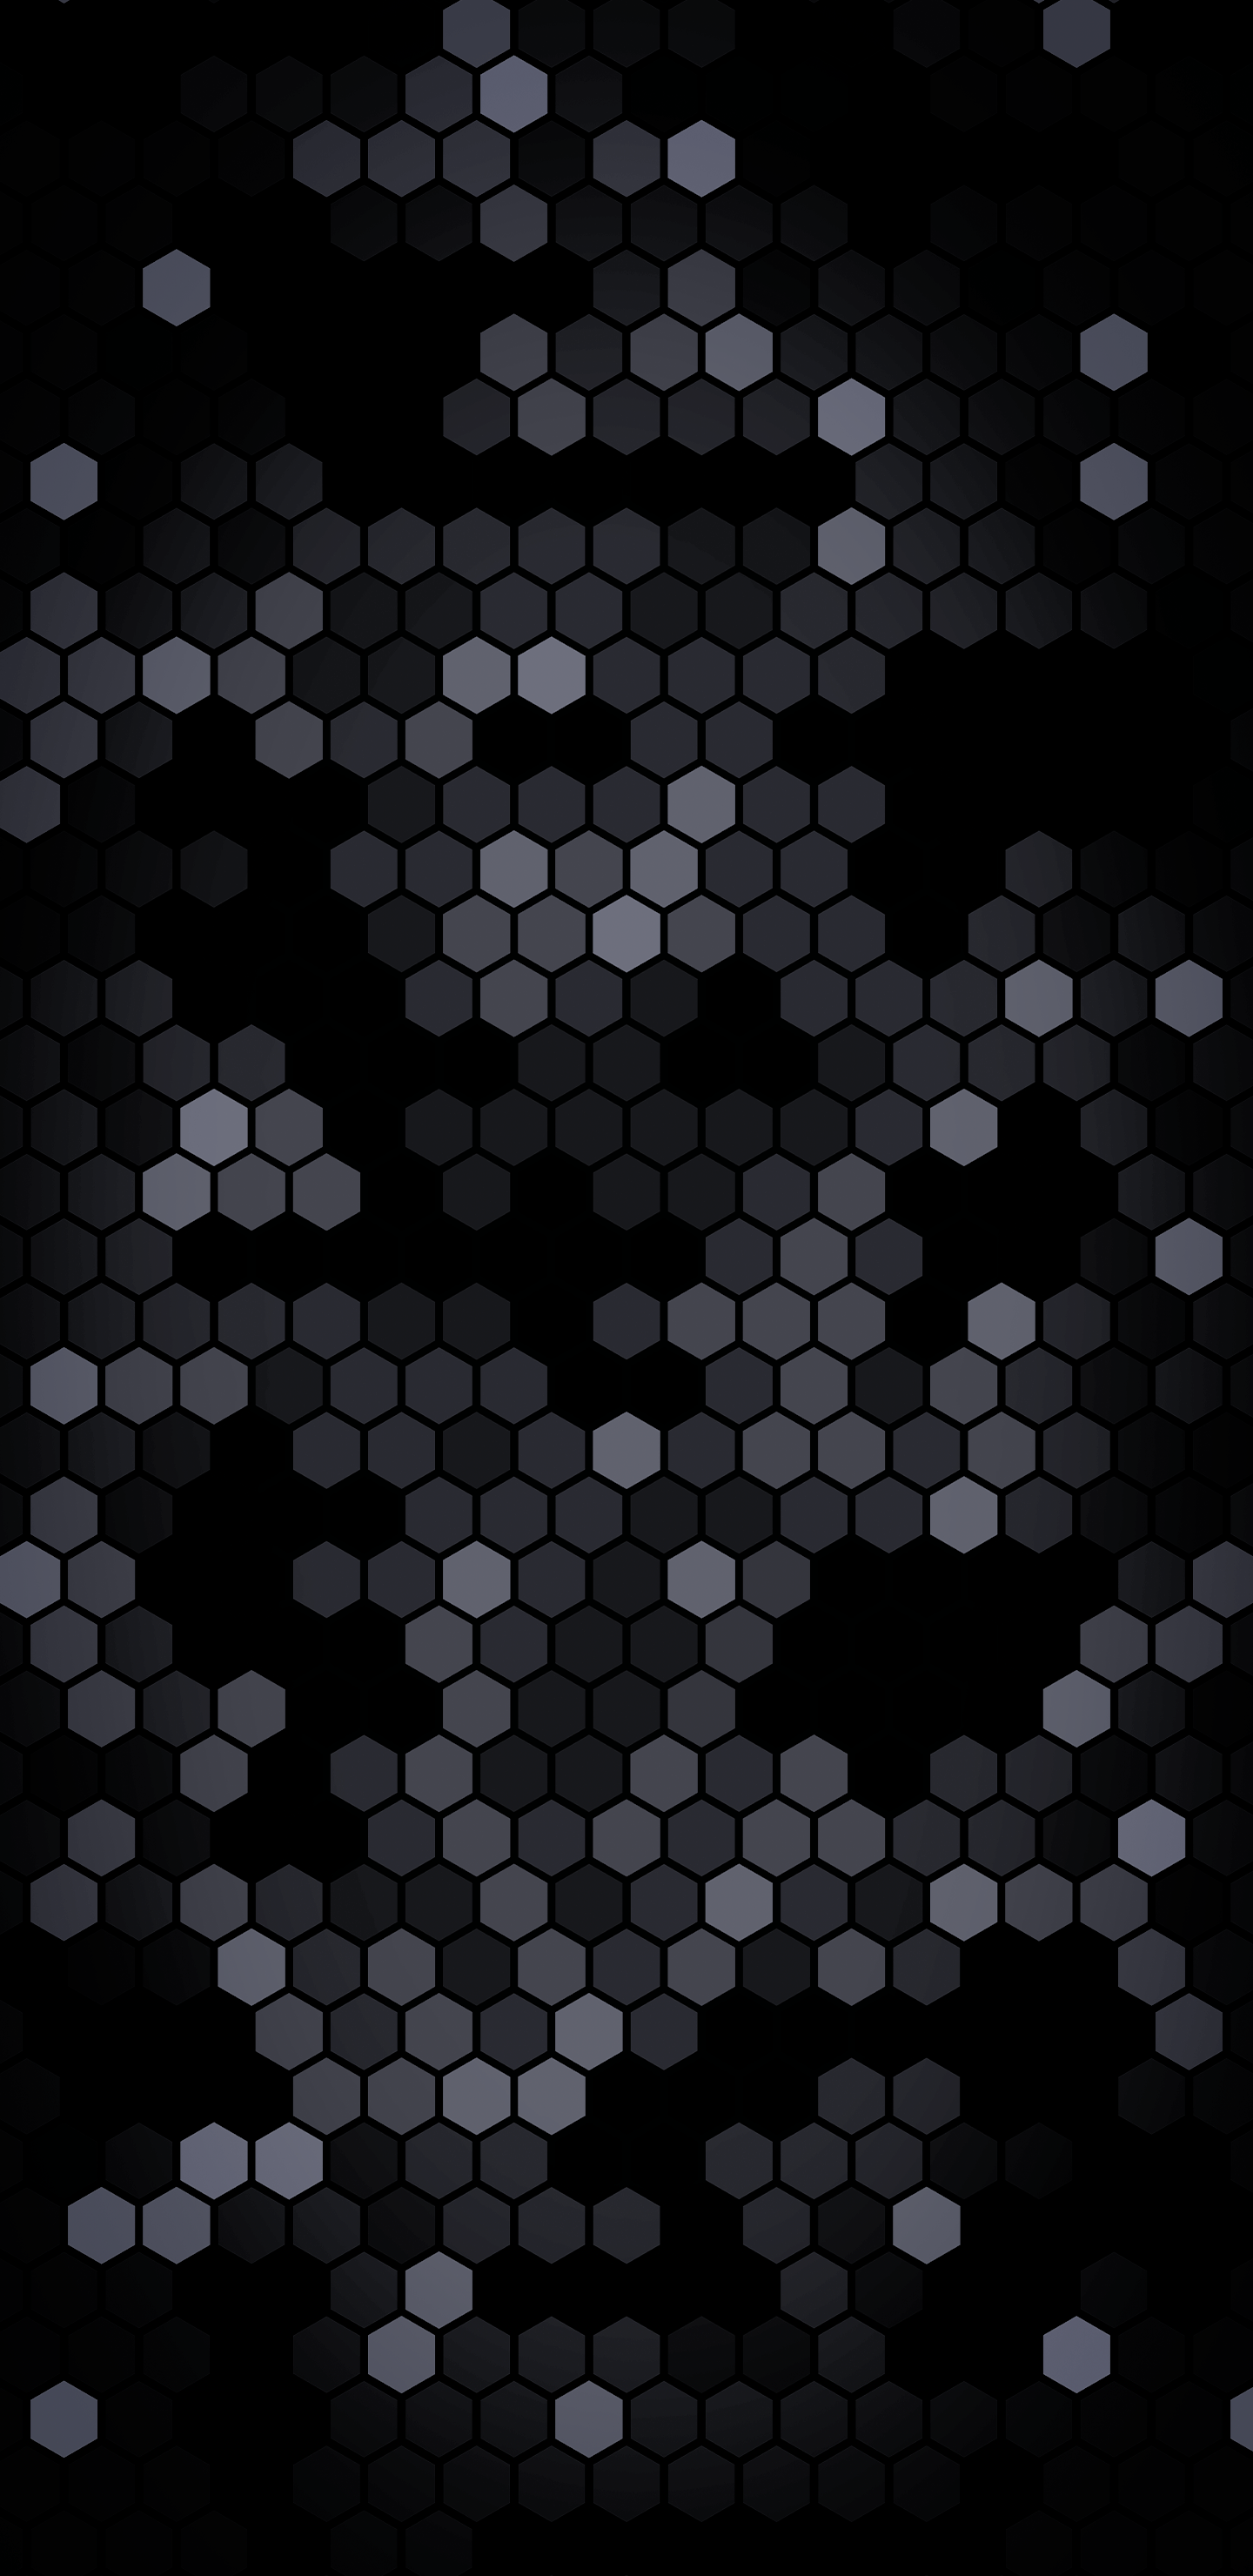 Hexagon Swarm [1440x2960]